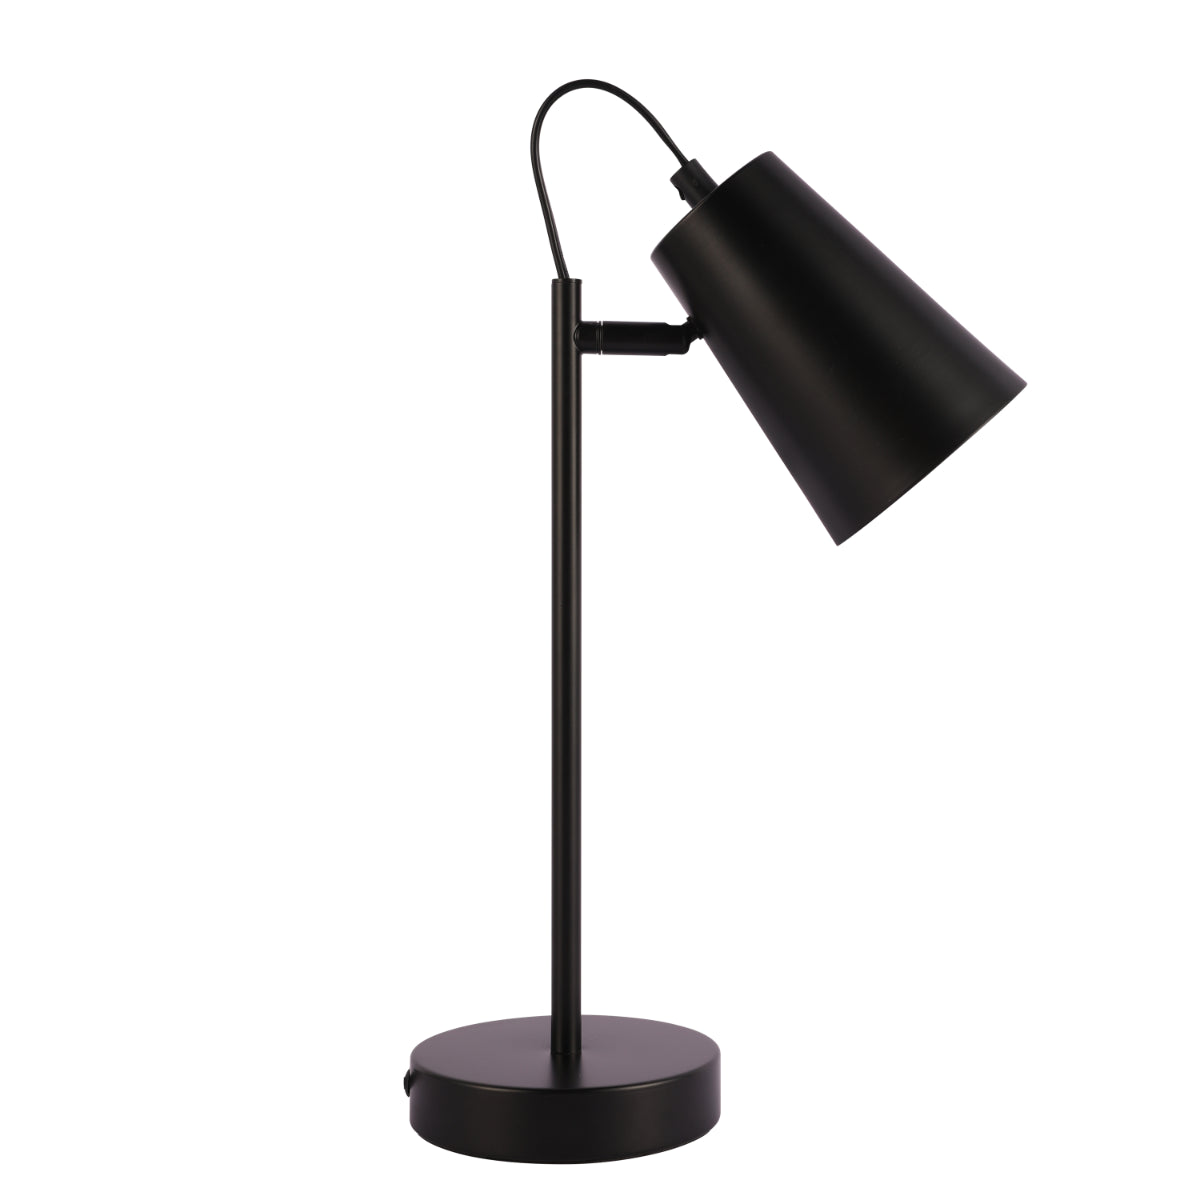 Main image of Sleek Cut Cone Desk Lamp in Vibrant Colors - Modern Elegance 130-03664